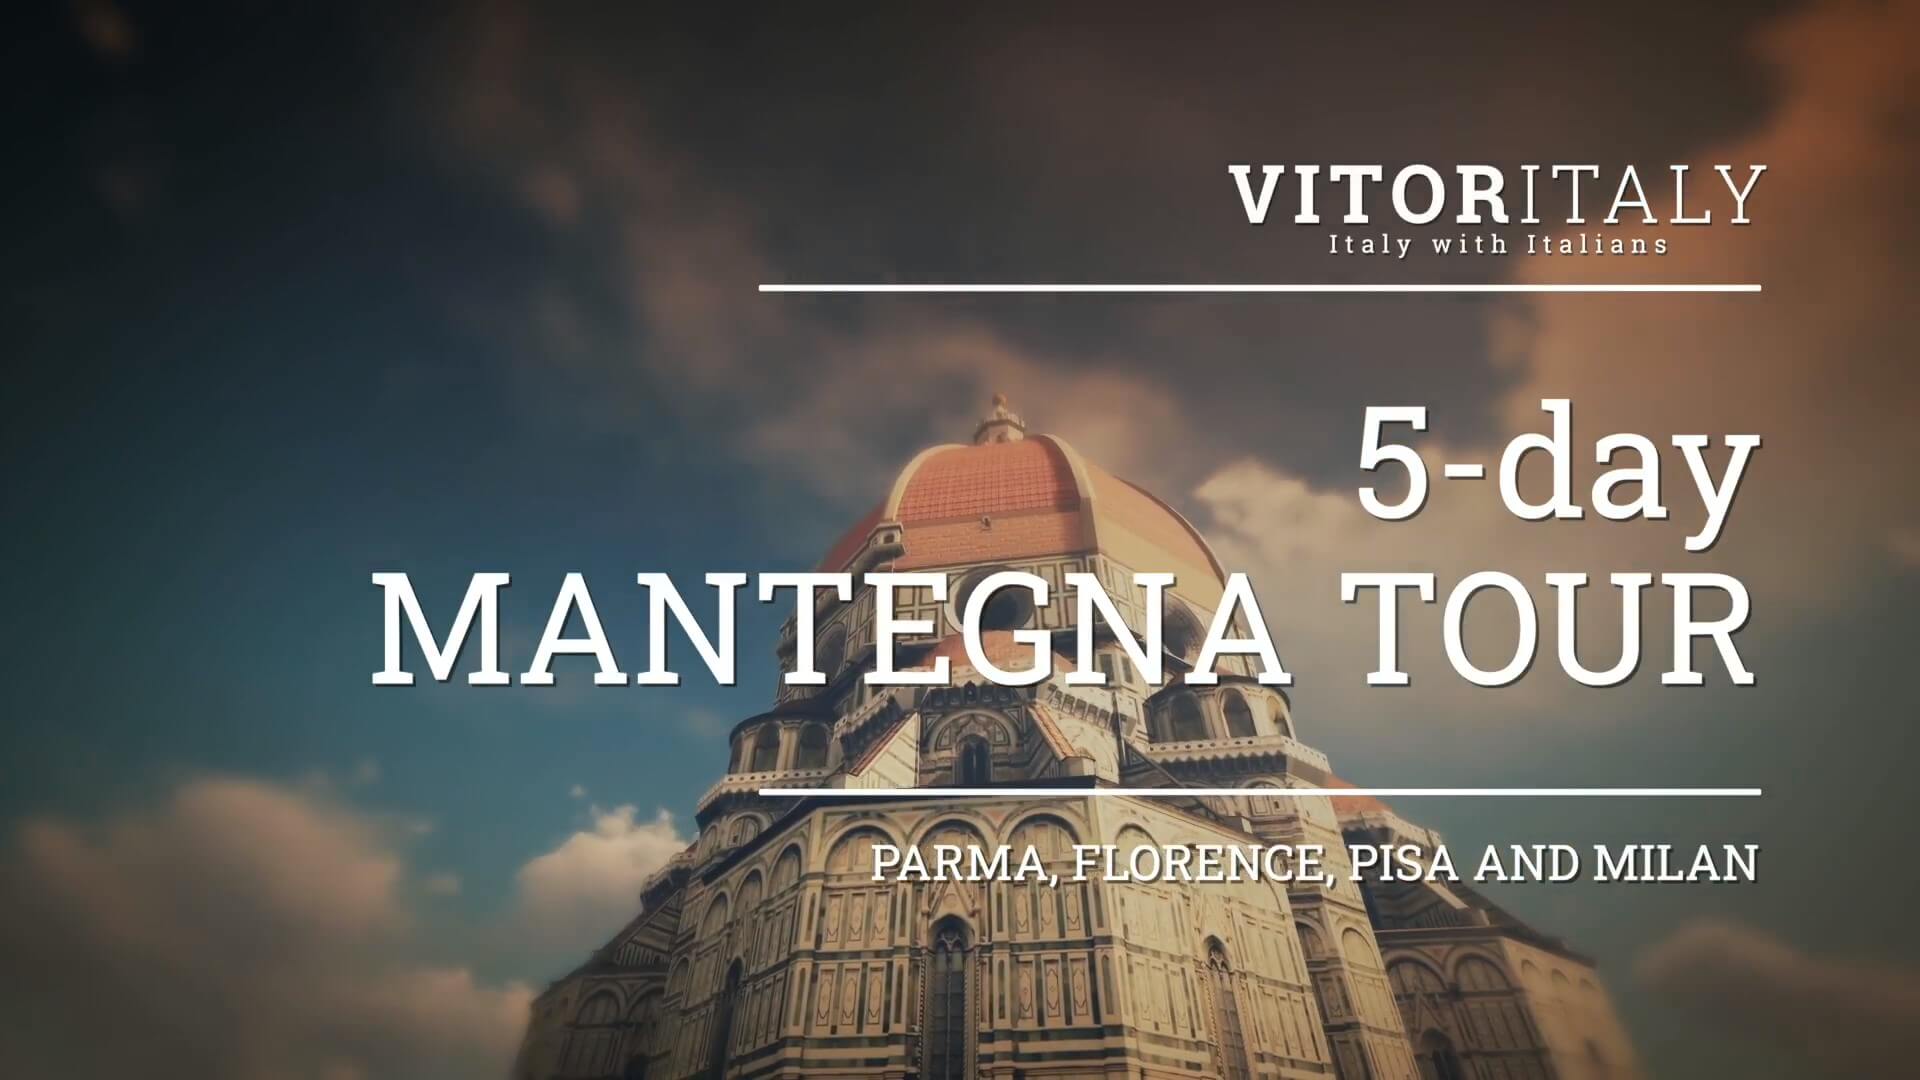 MANTEGNA PRIVATE TOUR - Parma, Florence, Pisa and Milan 